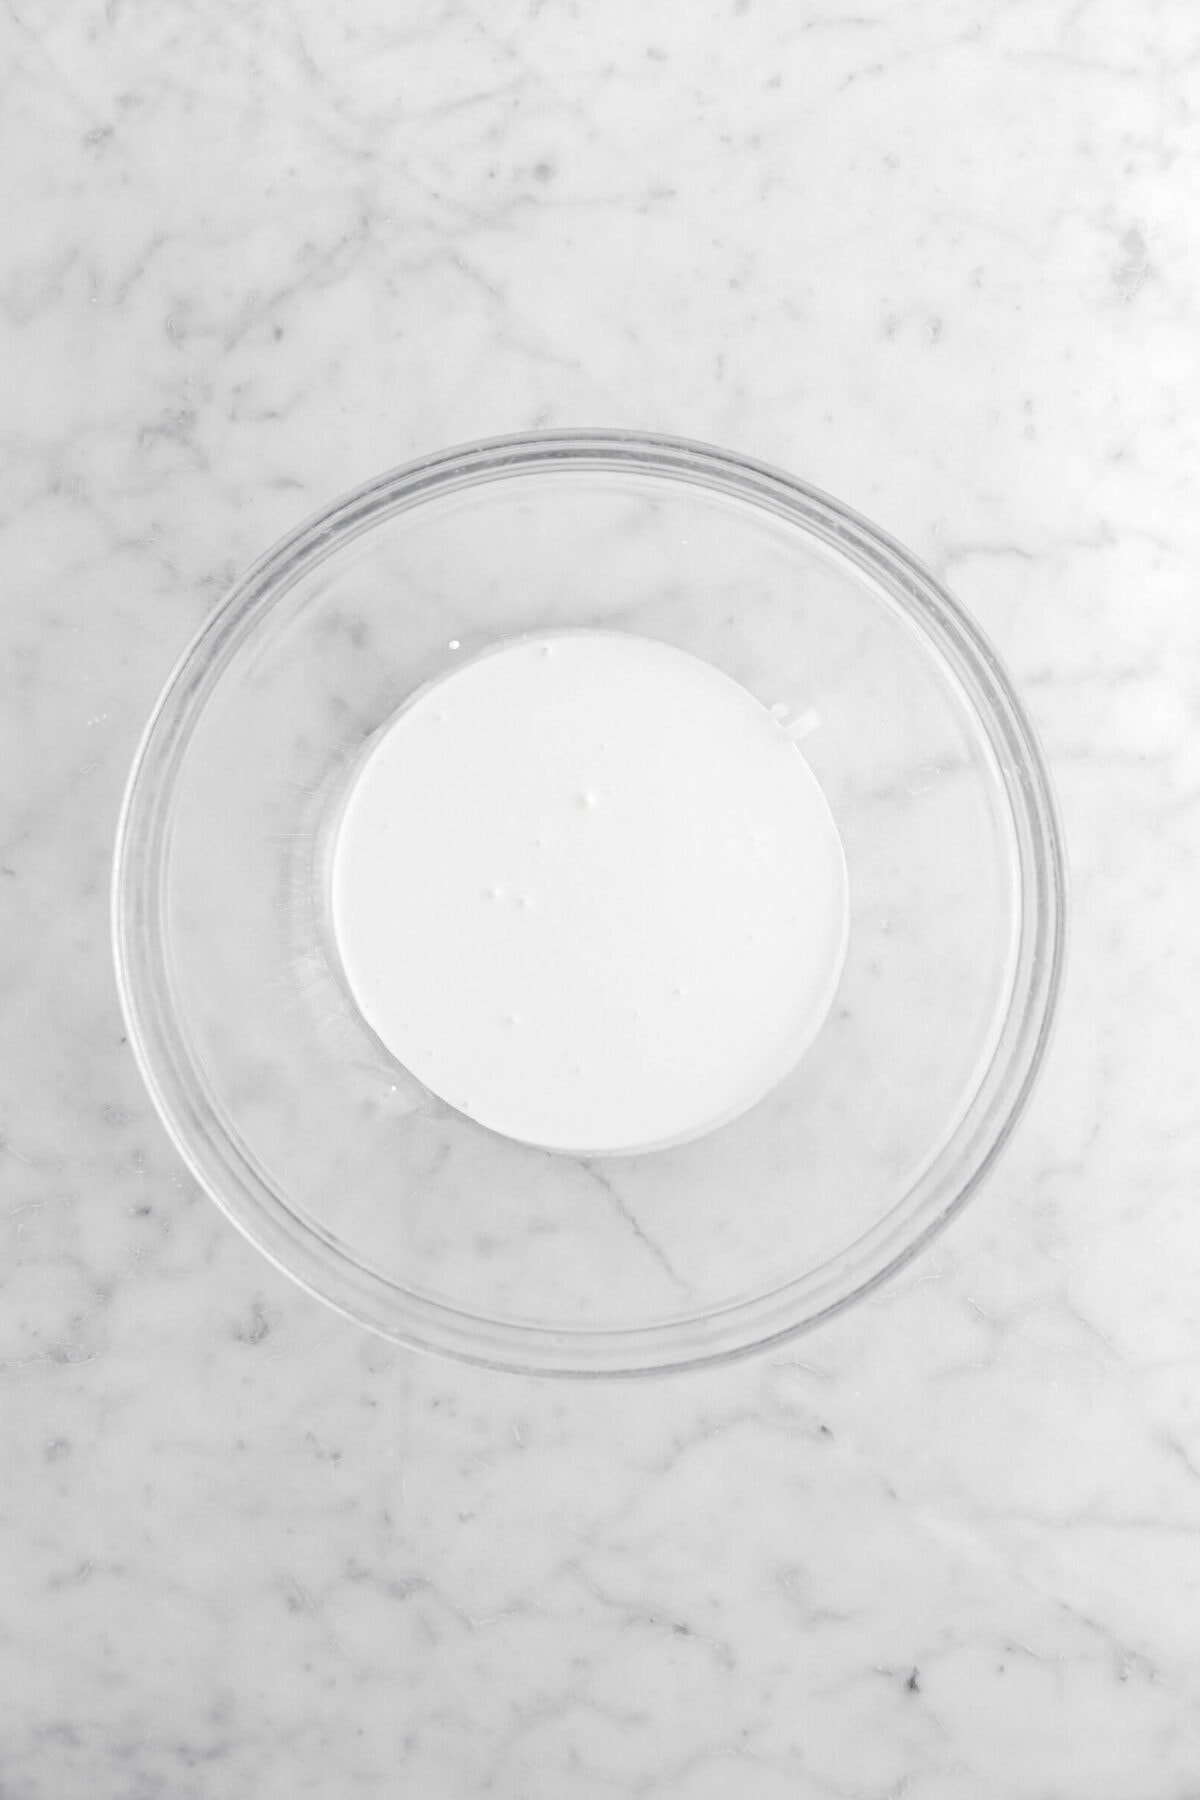 heavy cream in glass bowl.